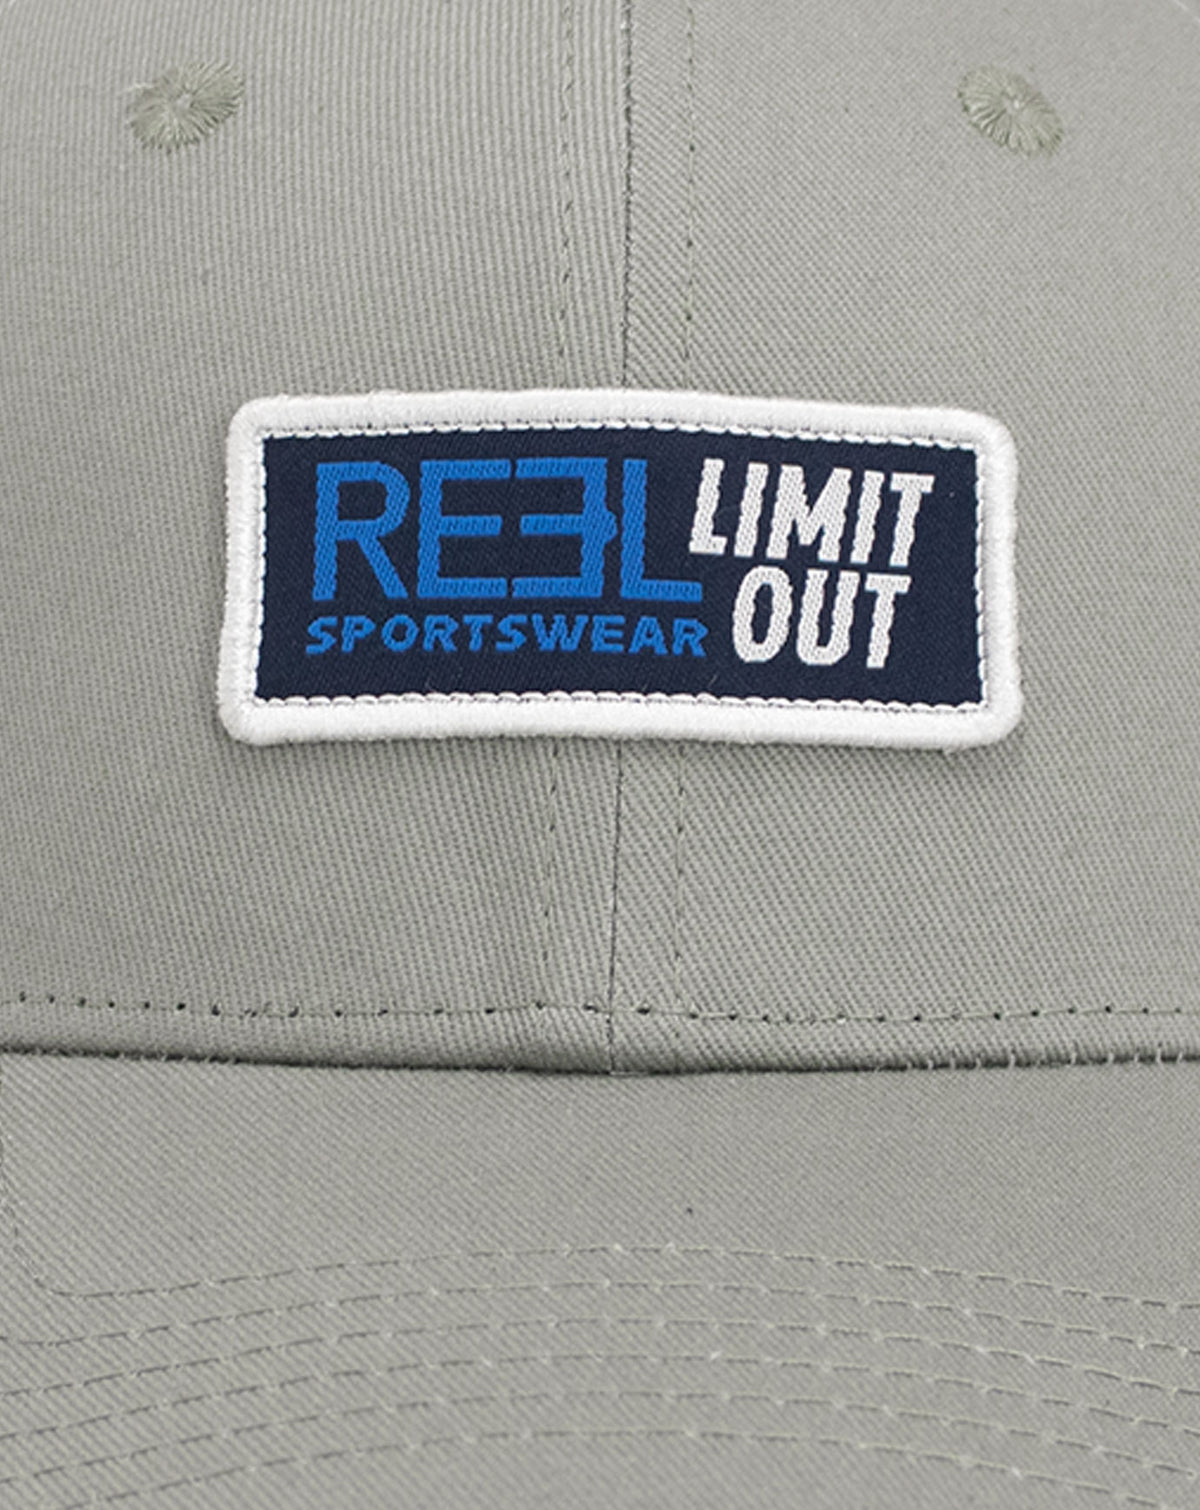 Limit Out trucker hat